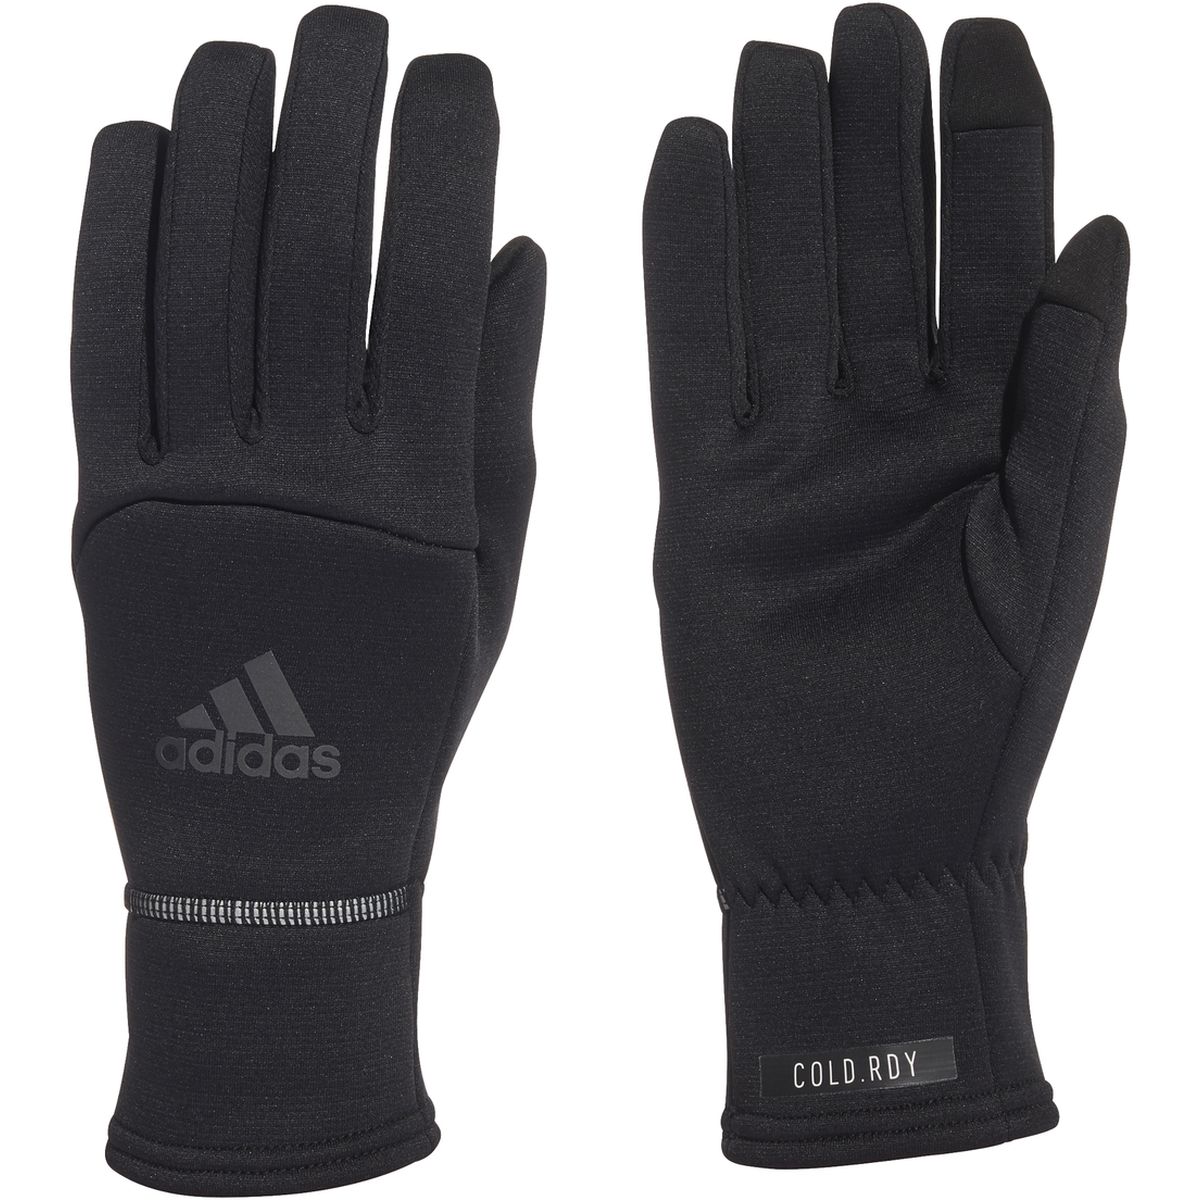 Adidas COLD.RDY Running Training Handschuhe Unisex